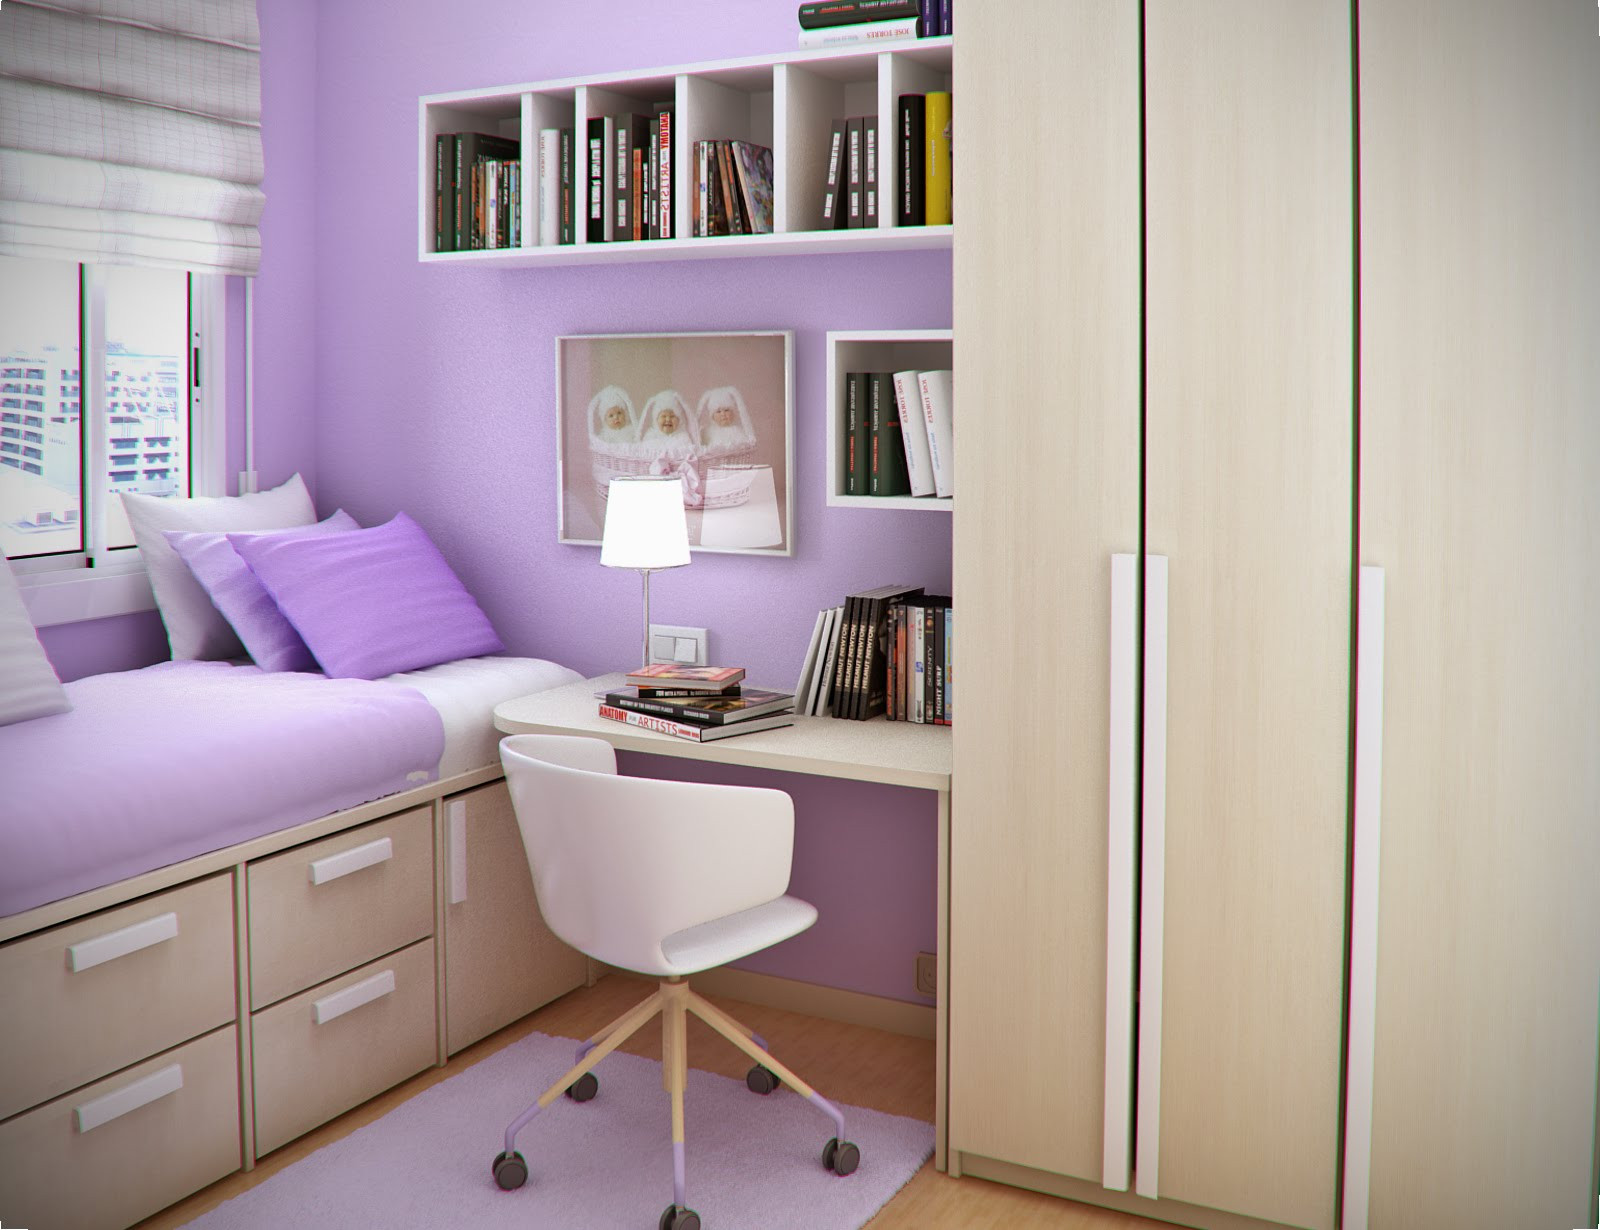 Small Bedroom With Desk
 Small Bedroom Desks